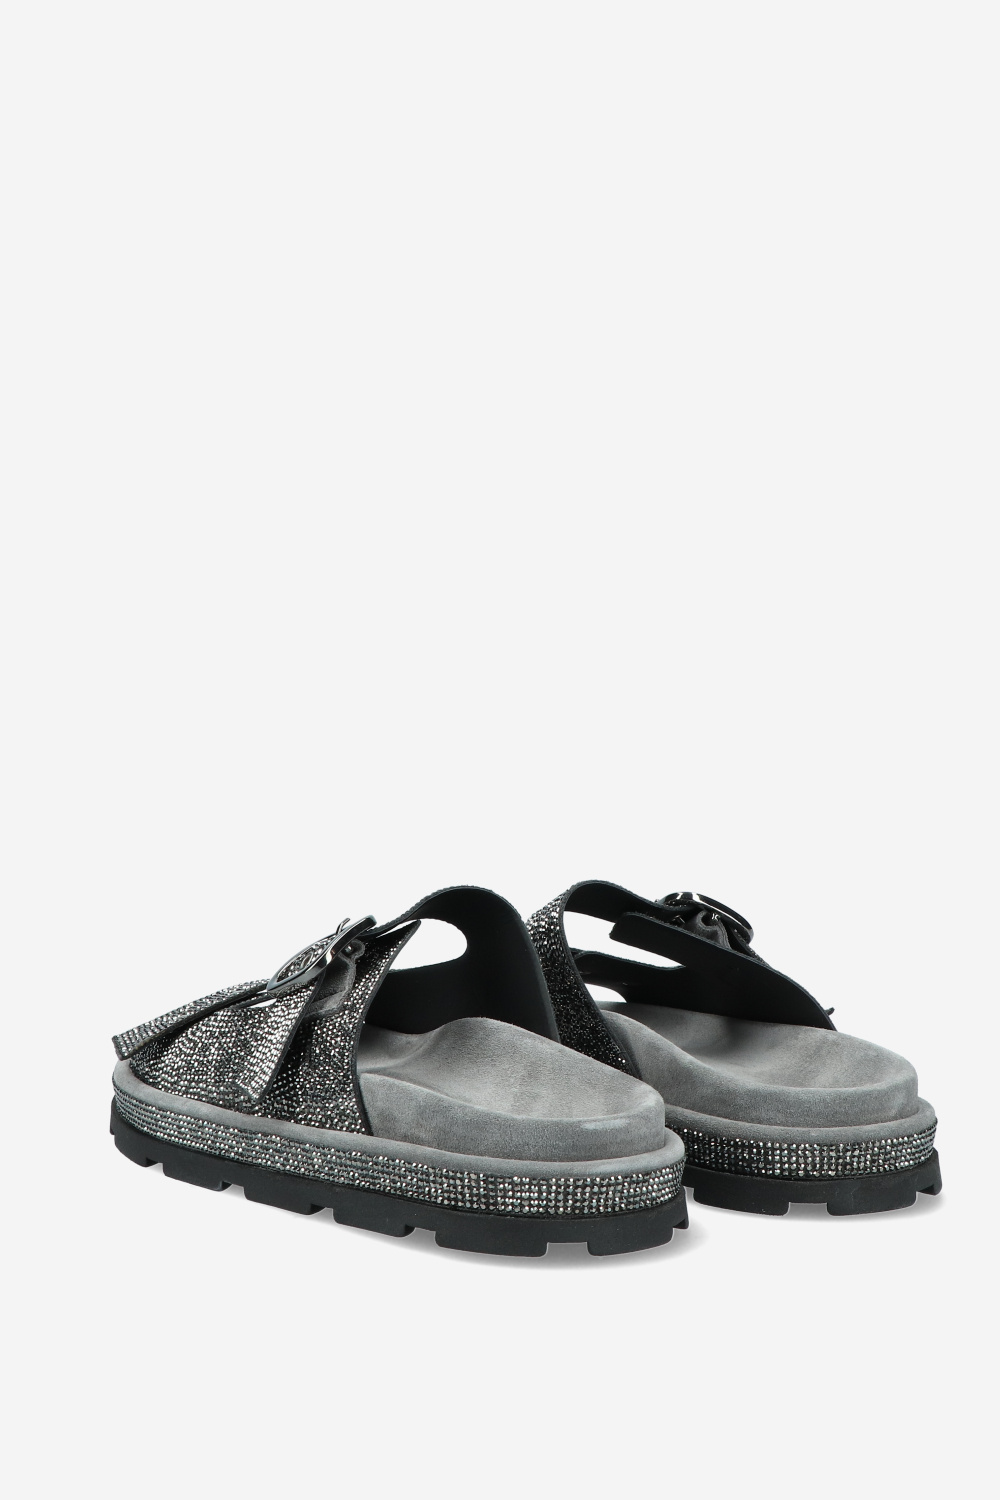 Franco Baldini Sandals Grey